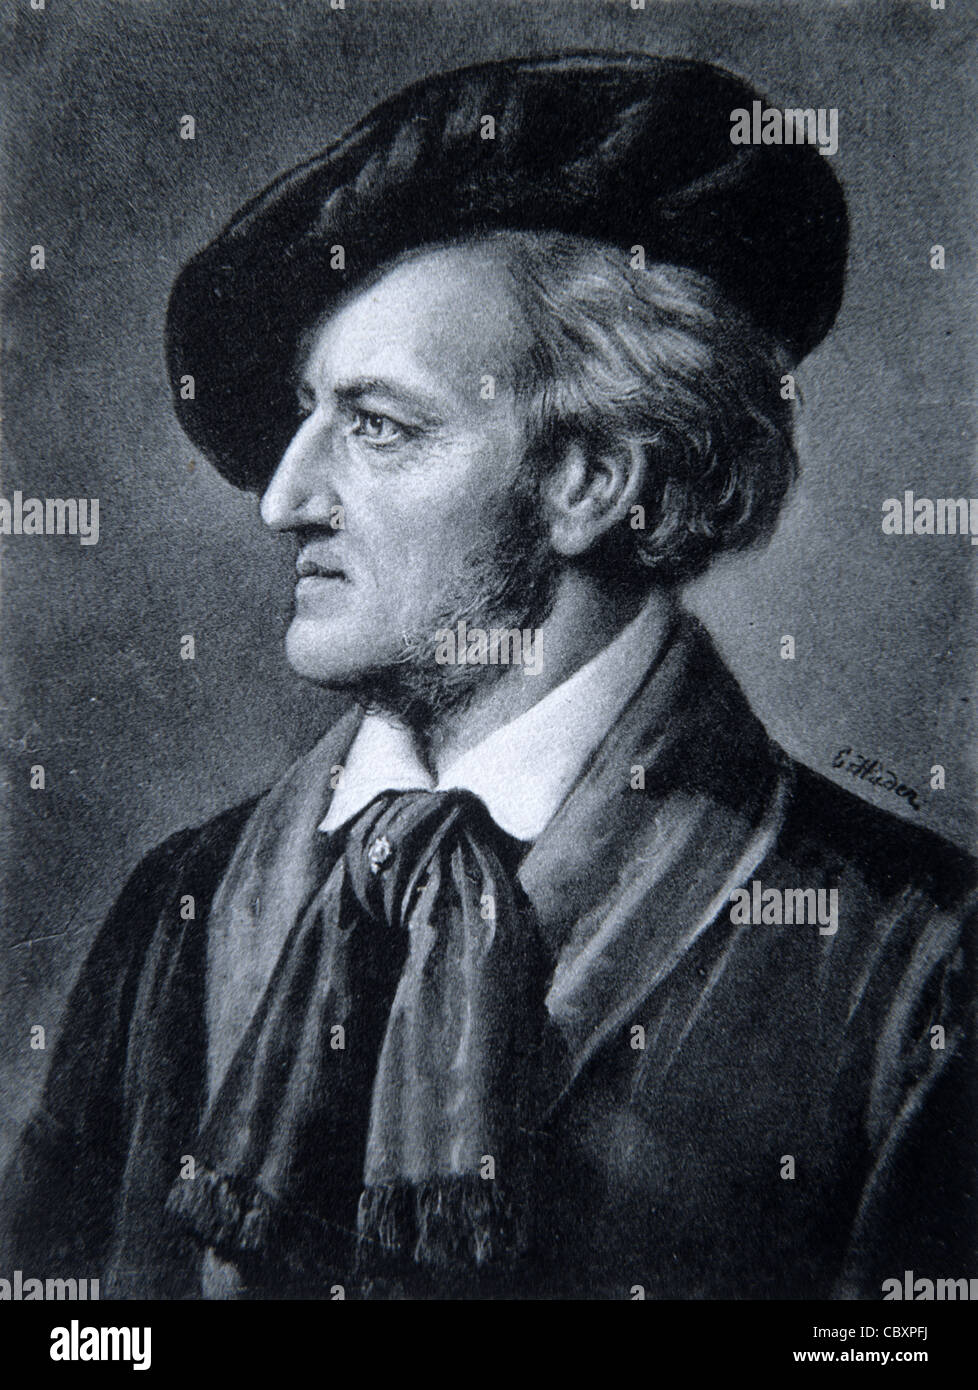 Portrait of Richard Wagner (1813-83) or Wilhelm Wagner, German Composer and Musical Theorist. Portrait.Vintage Illustration or Engraving Stock Photo